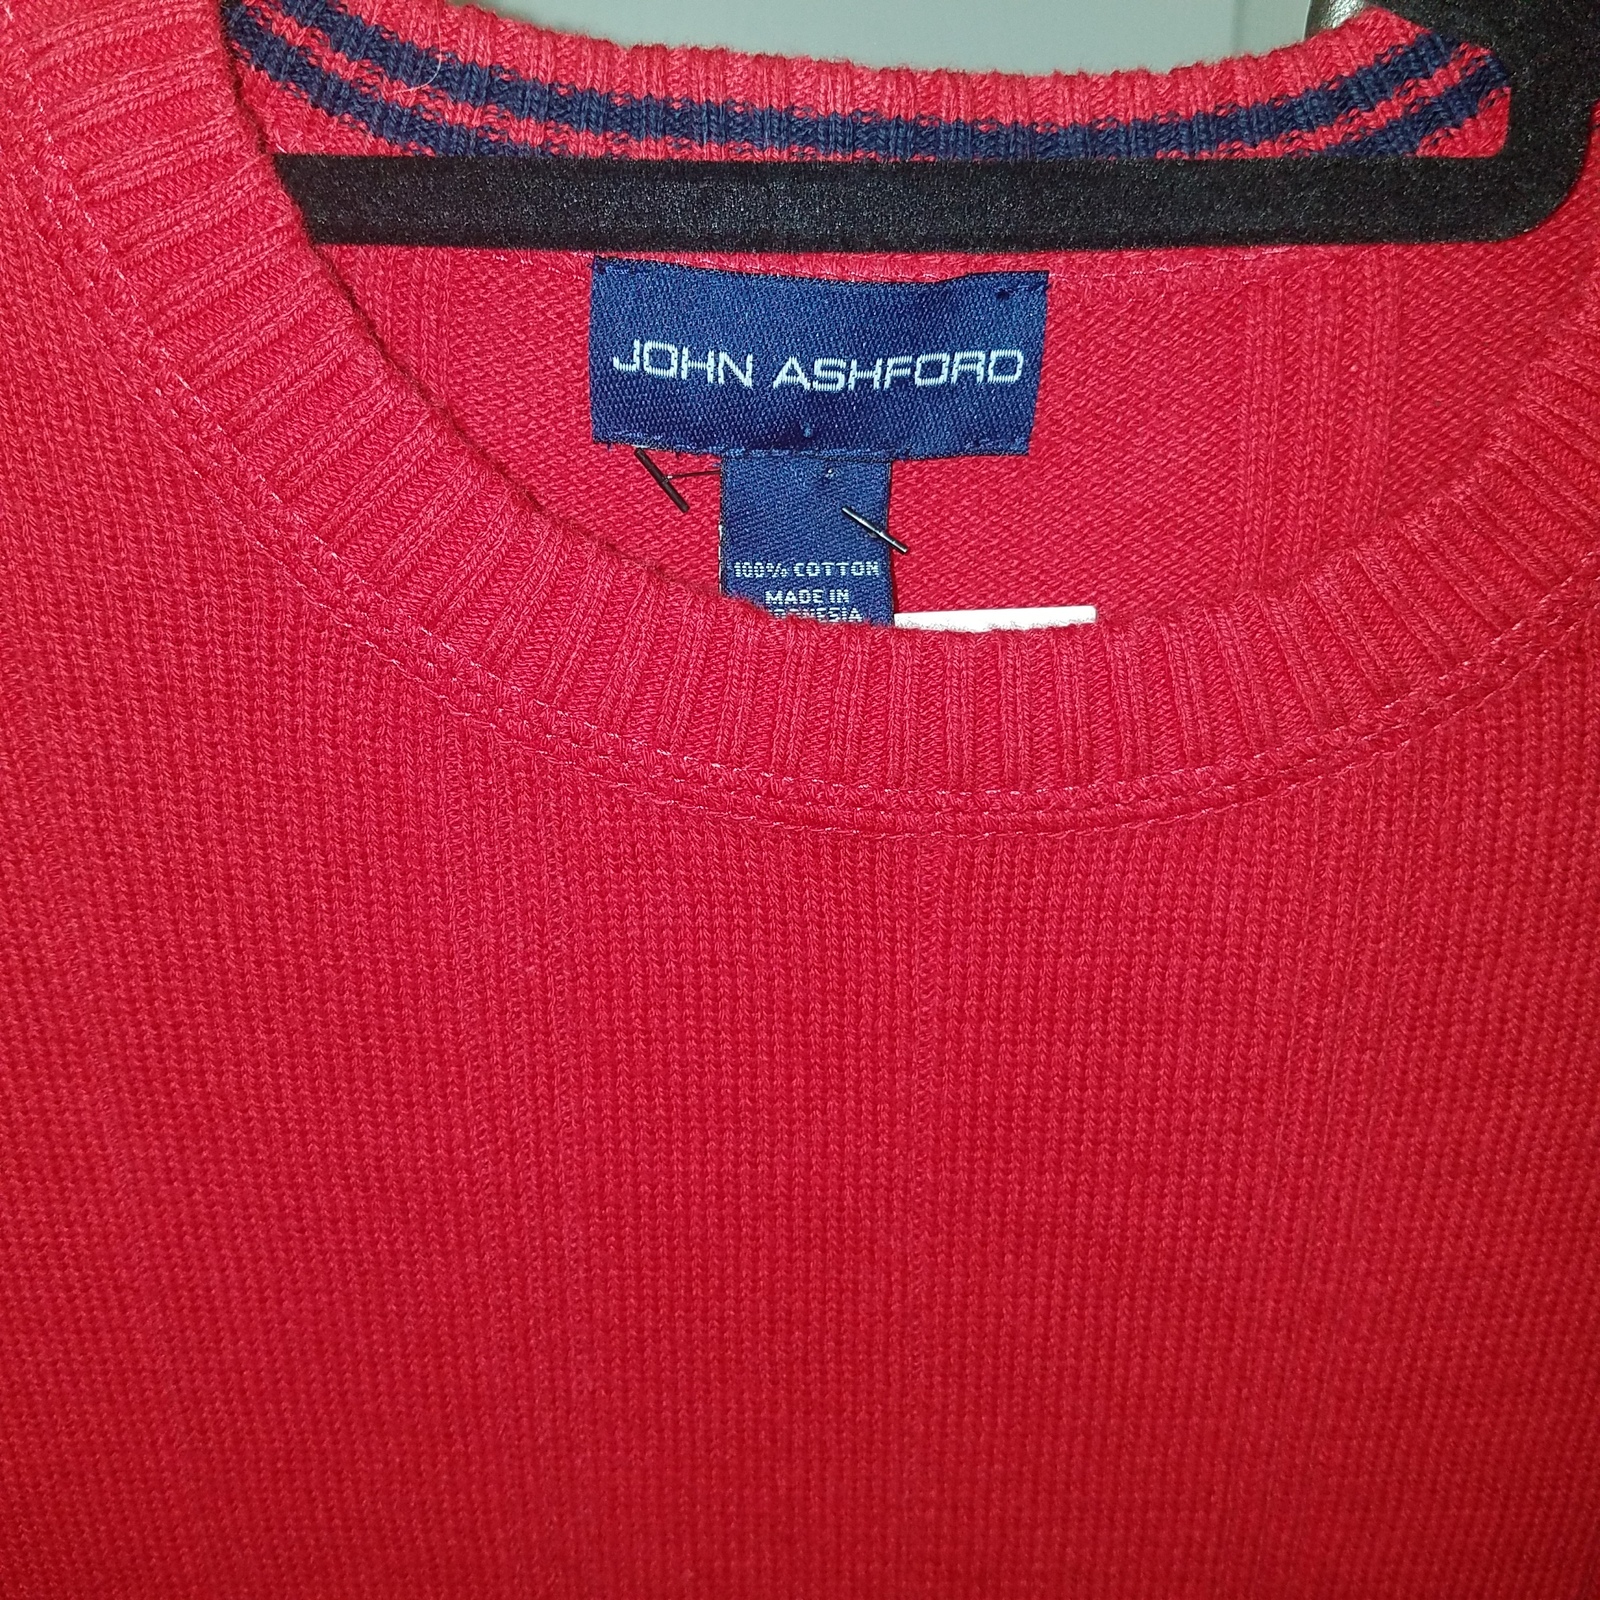 John Ashford 100% cotton men's crew neck sweater Small NWT - Men's Clothing